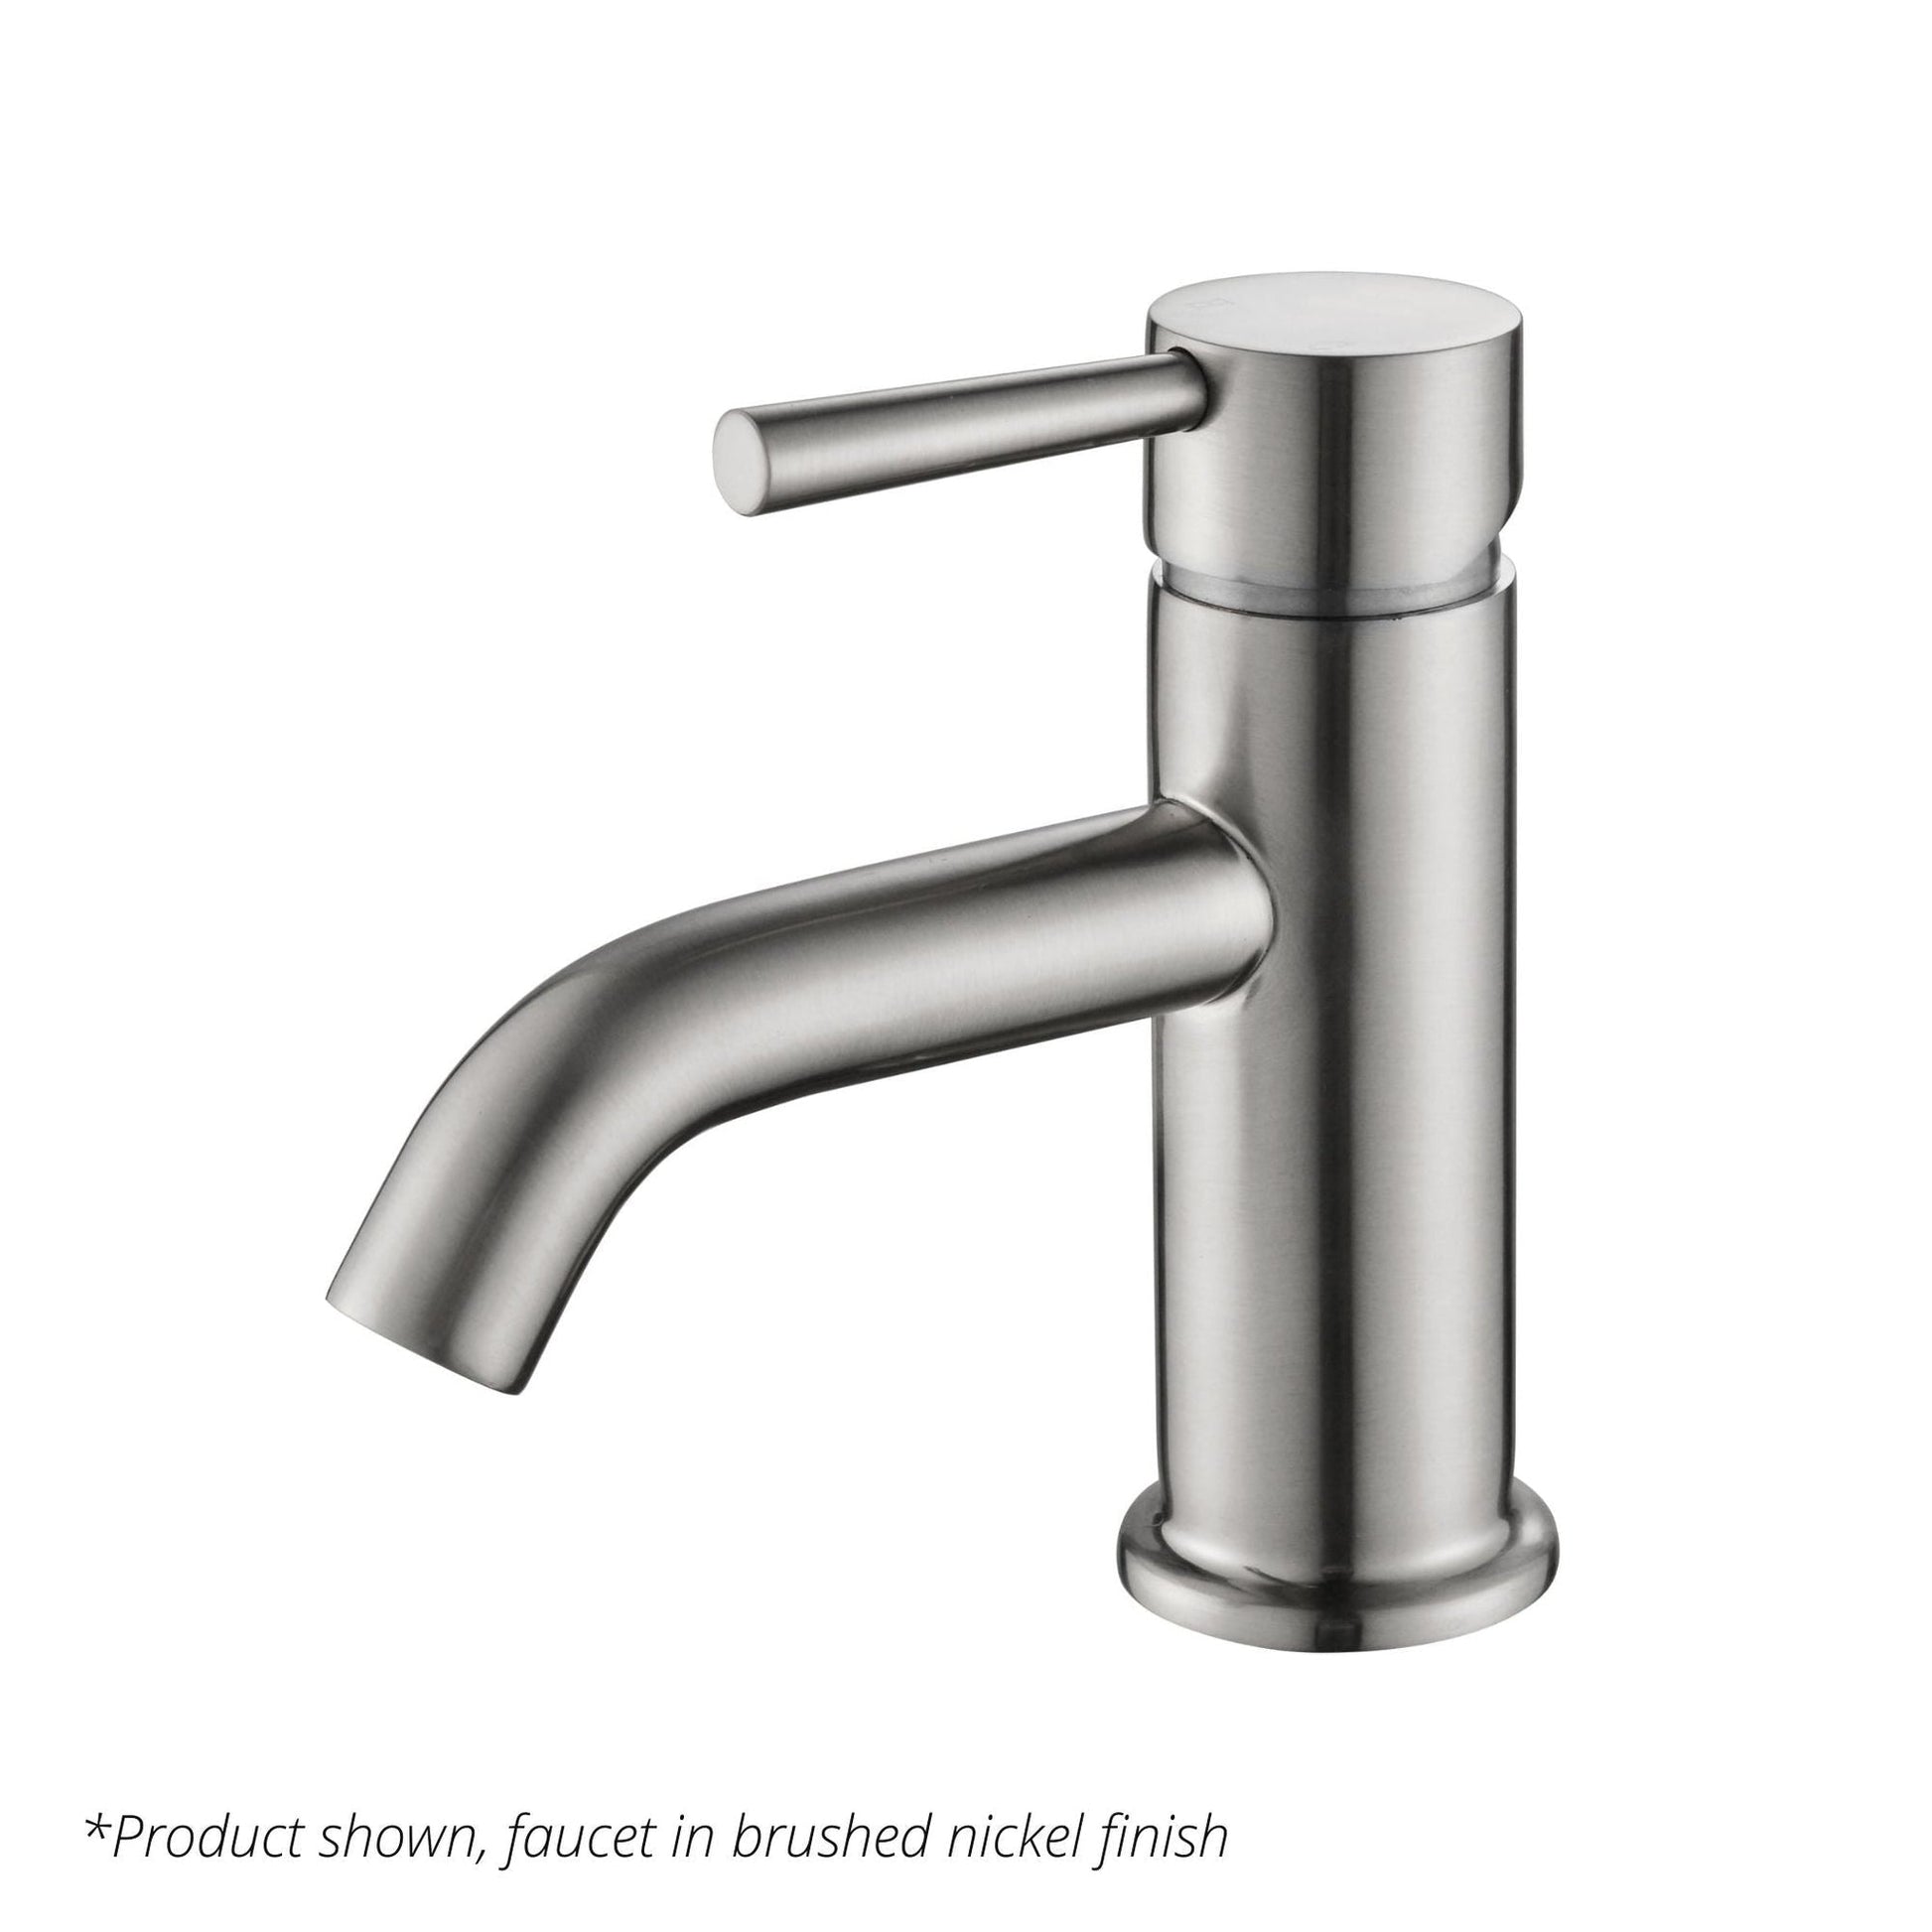 Duko FC359001 Single Handle Faucet in Brushed Nickel